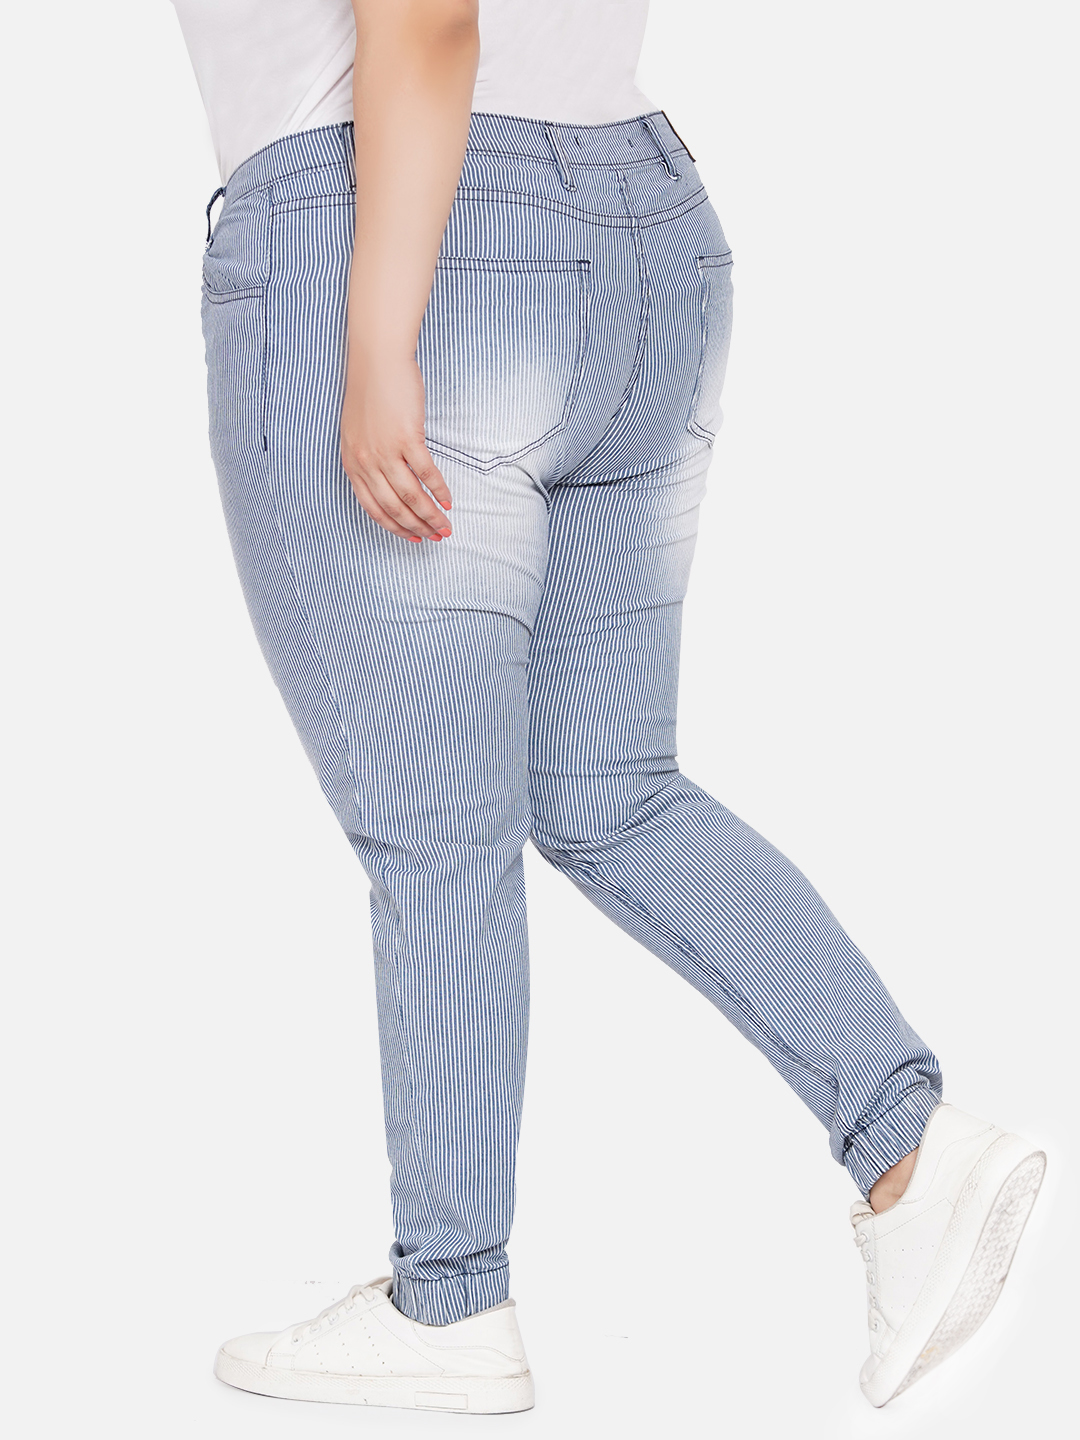 bottomwear_kiaahvi/jeans/KIAJ46/kiaj46-5.jpg